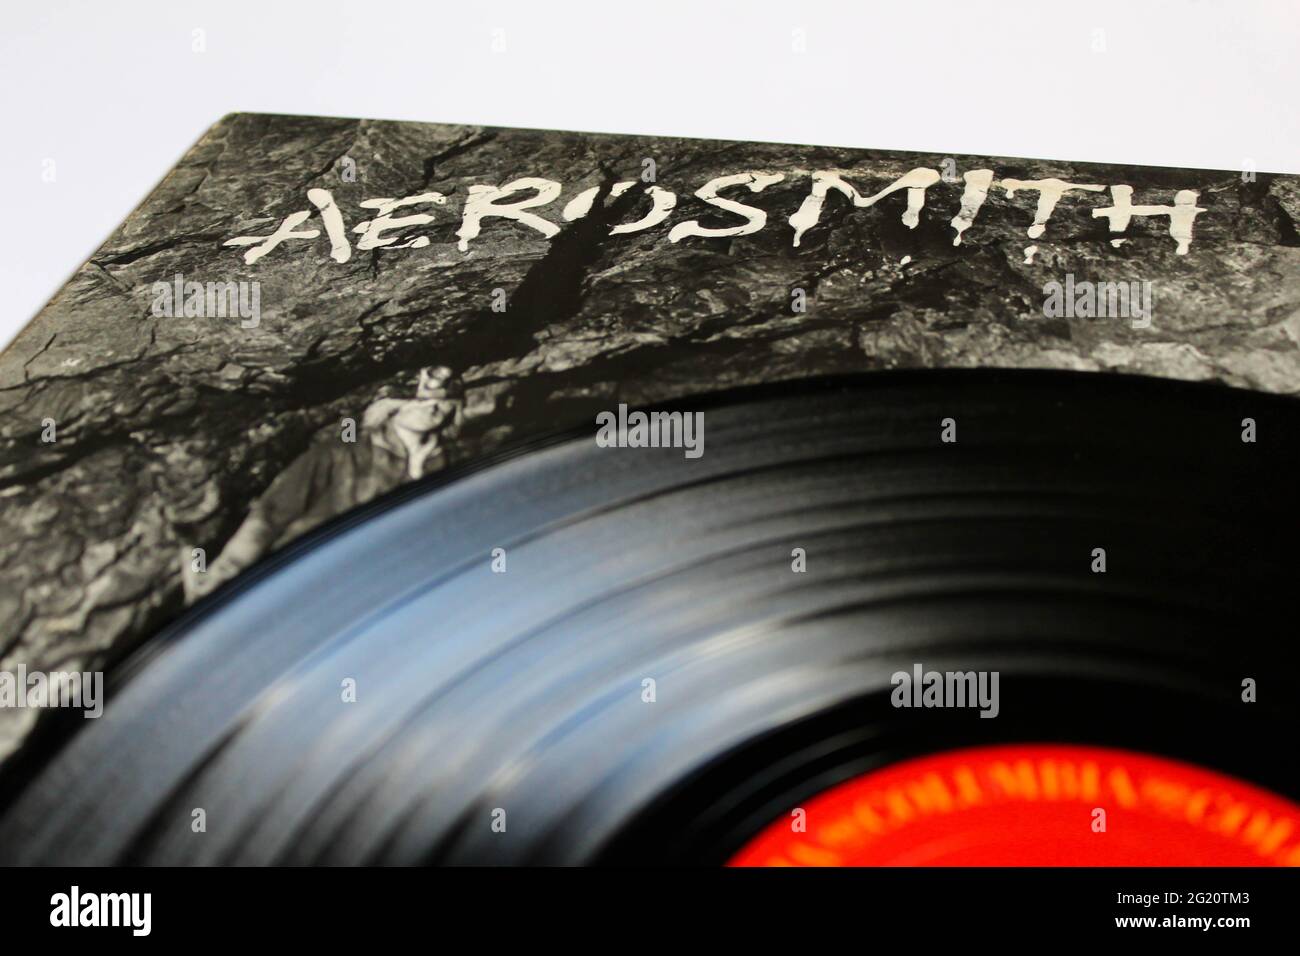 Classic rock band, Aerosmith, music album on vinyl record LP disc. Titled Night in the Ruts Album Cover Stock Photo